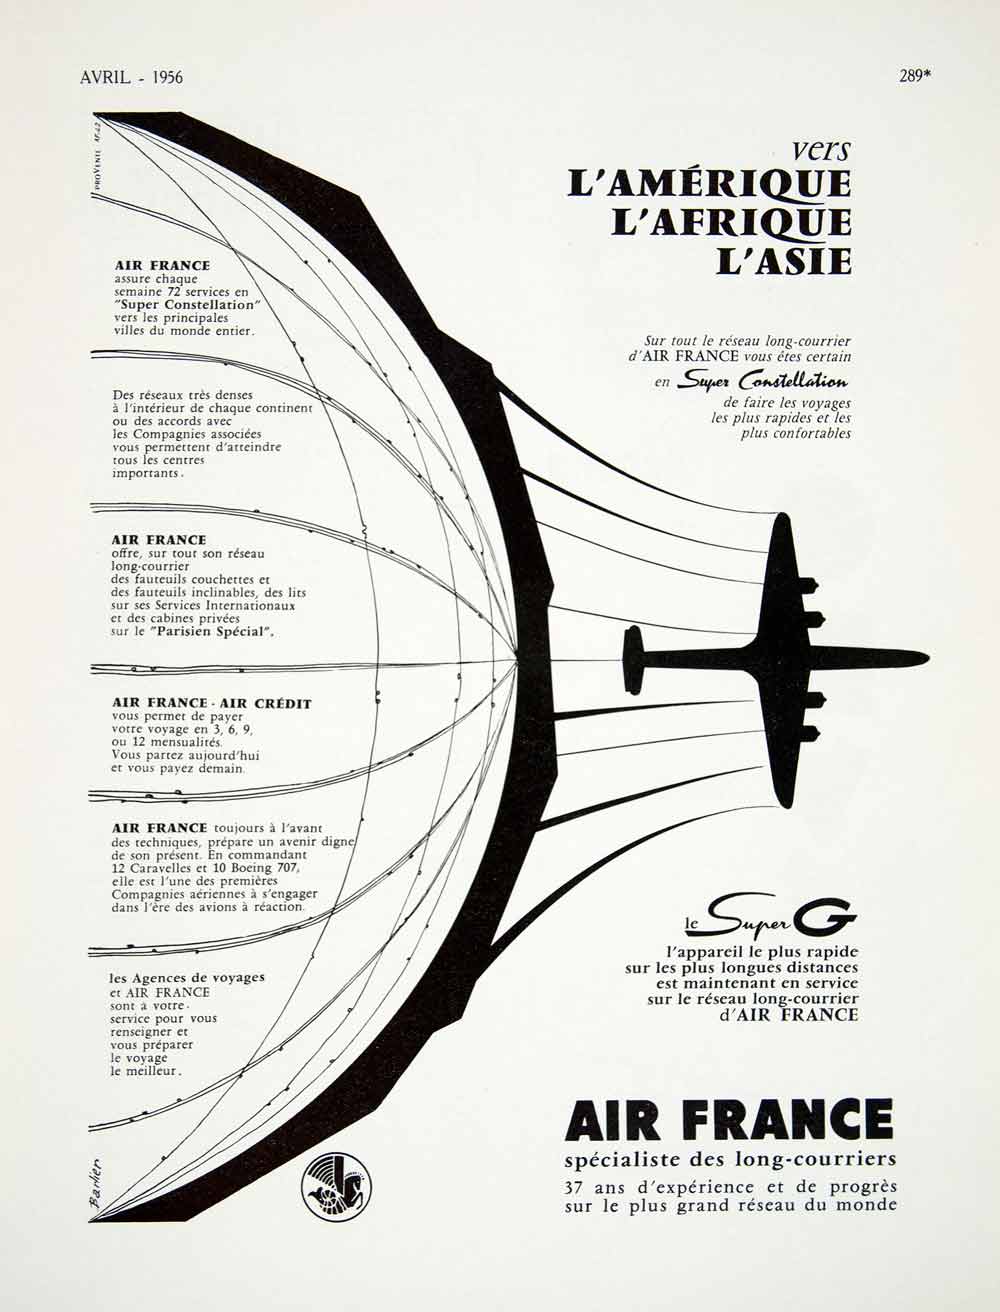 1956 Ad Air France Super G Airline Plane Silhouette Travel International VEN6